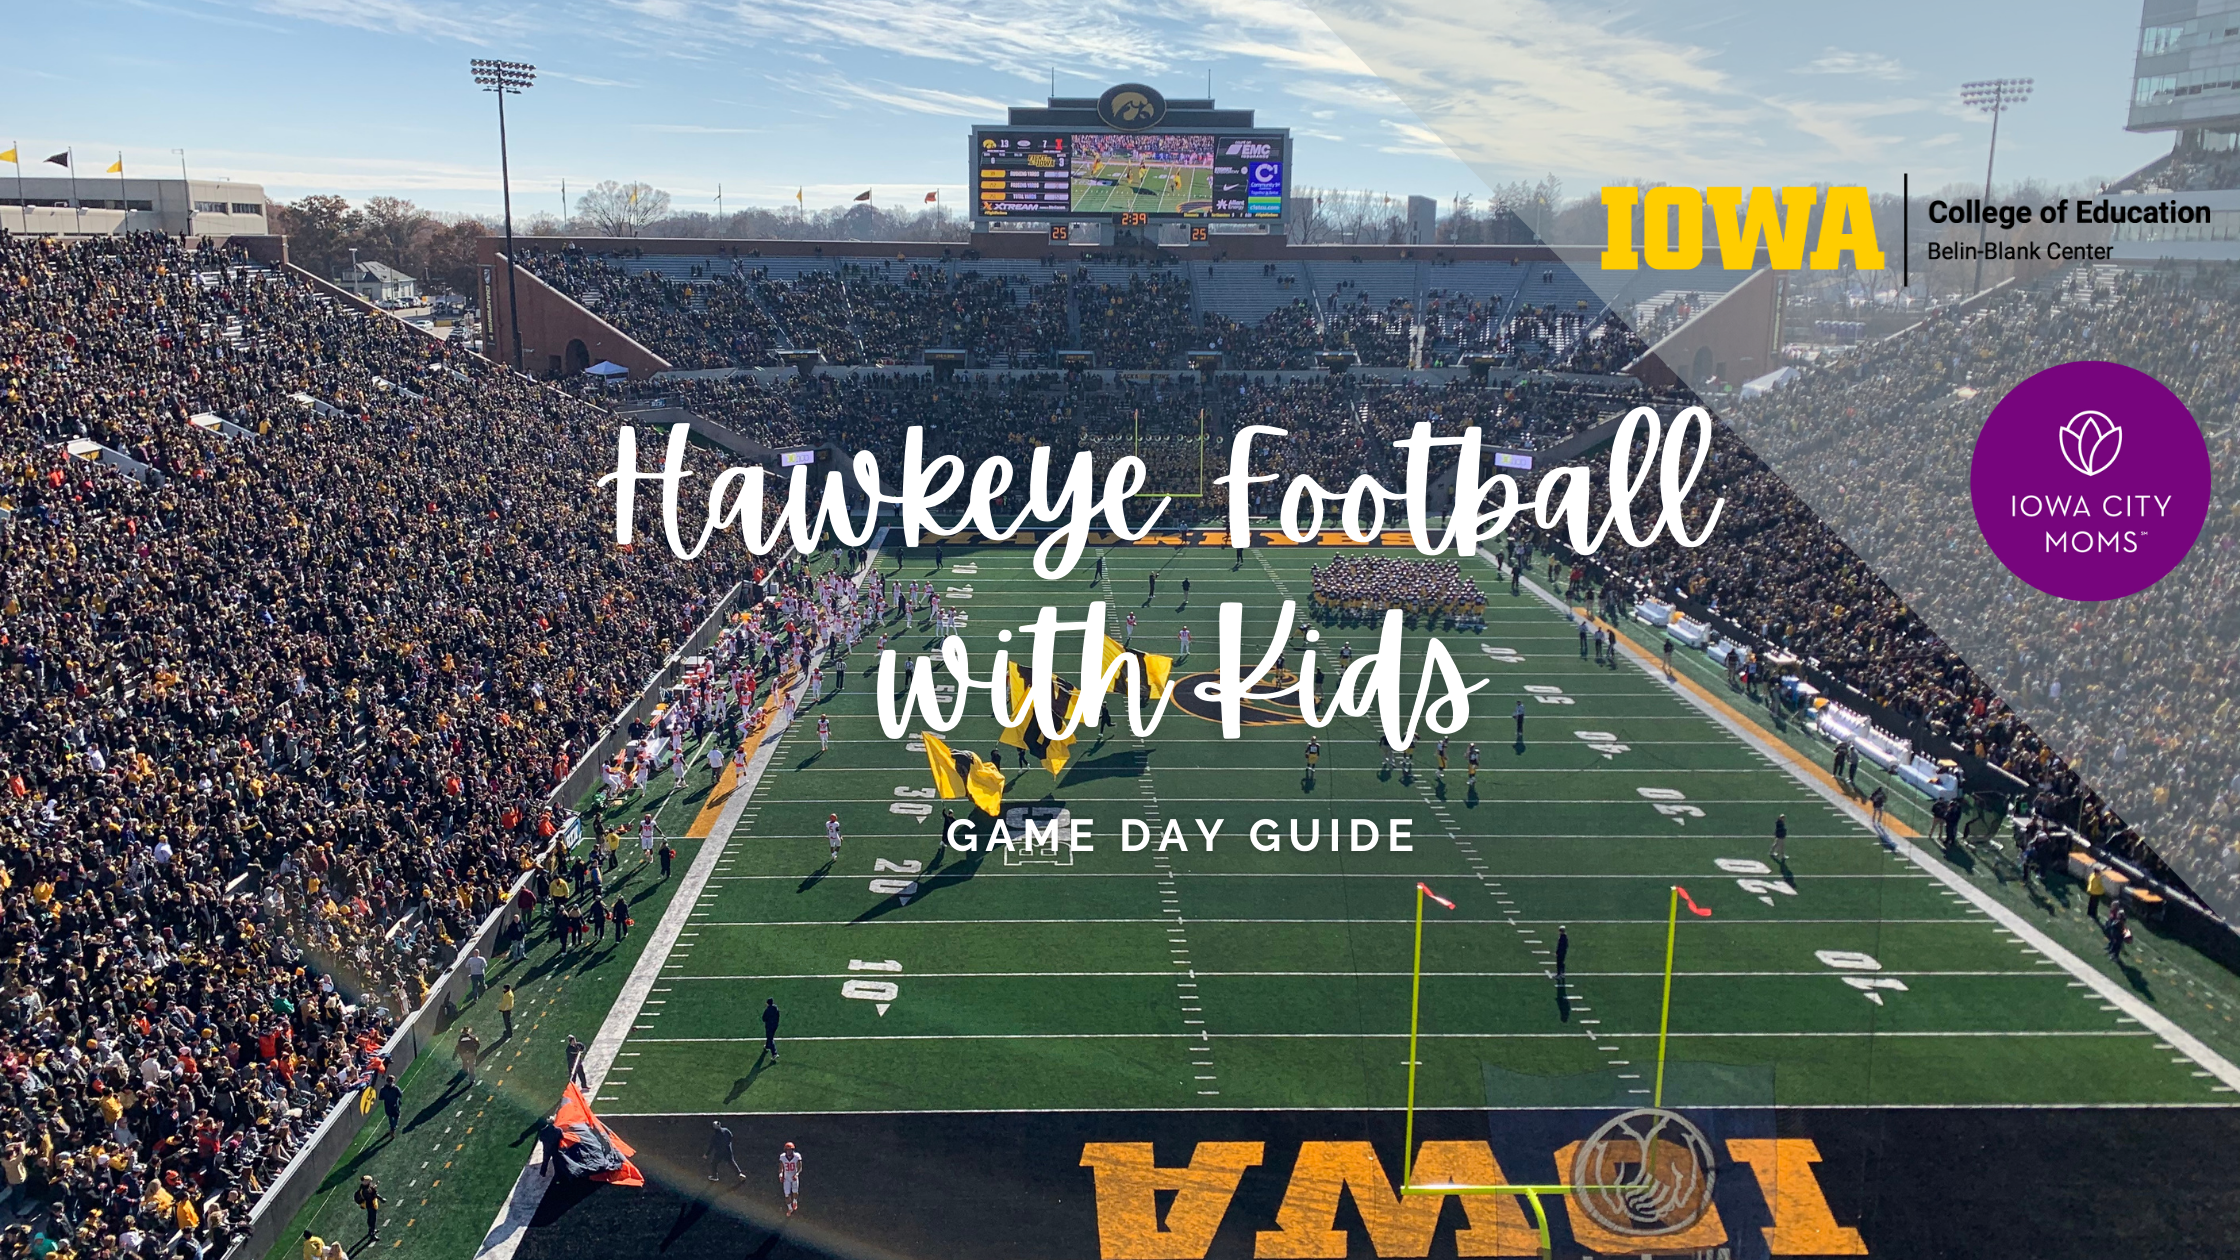 Hawkeye Football with Kids